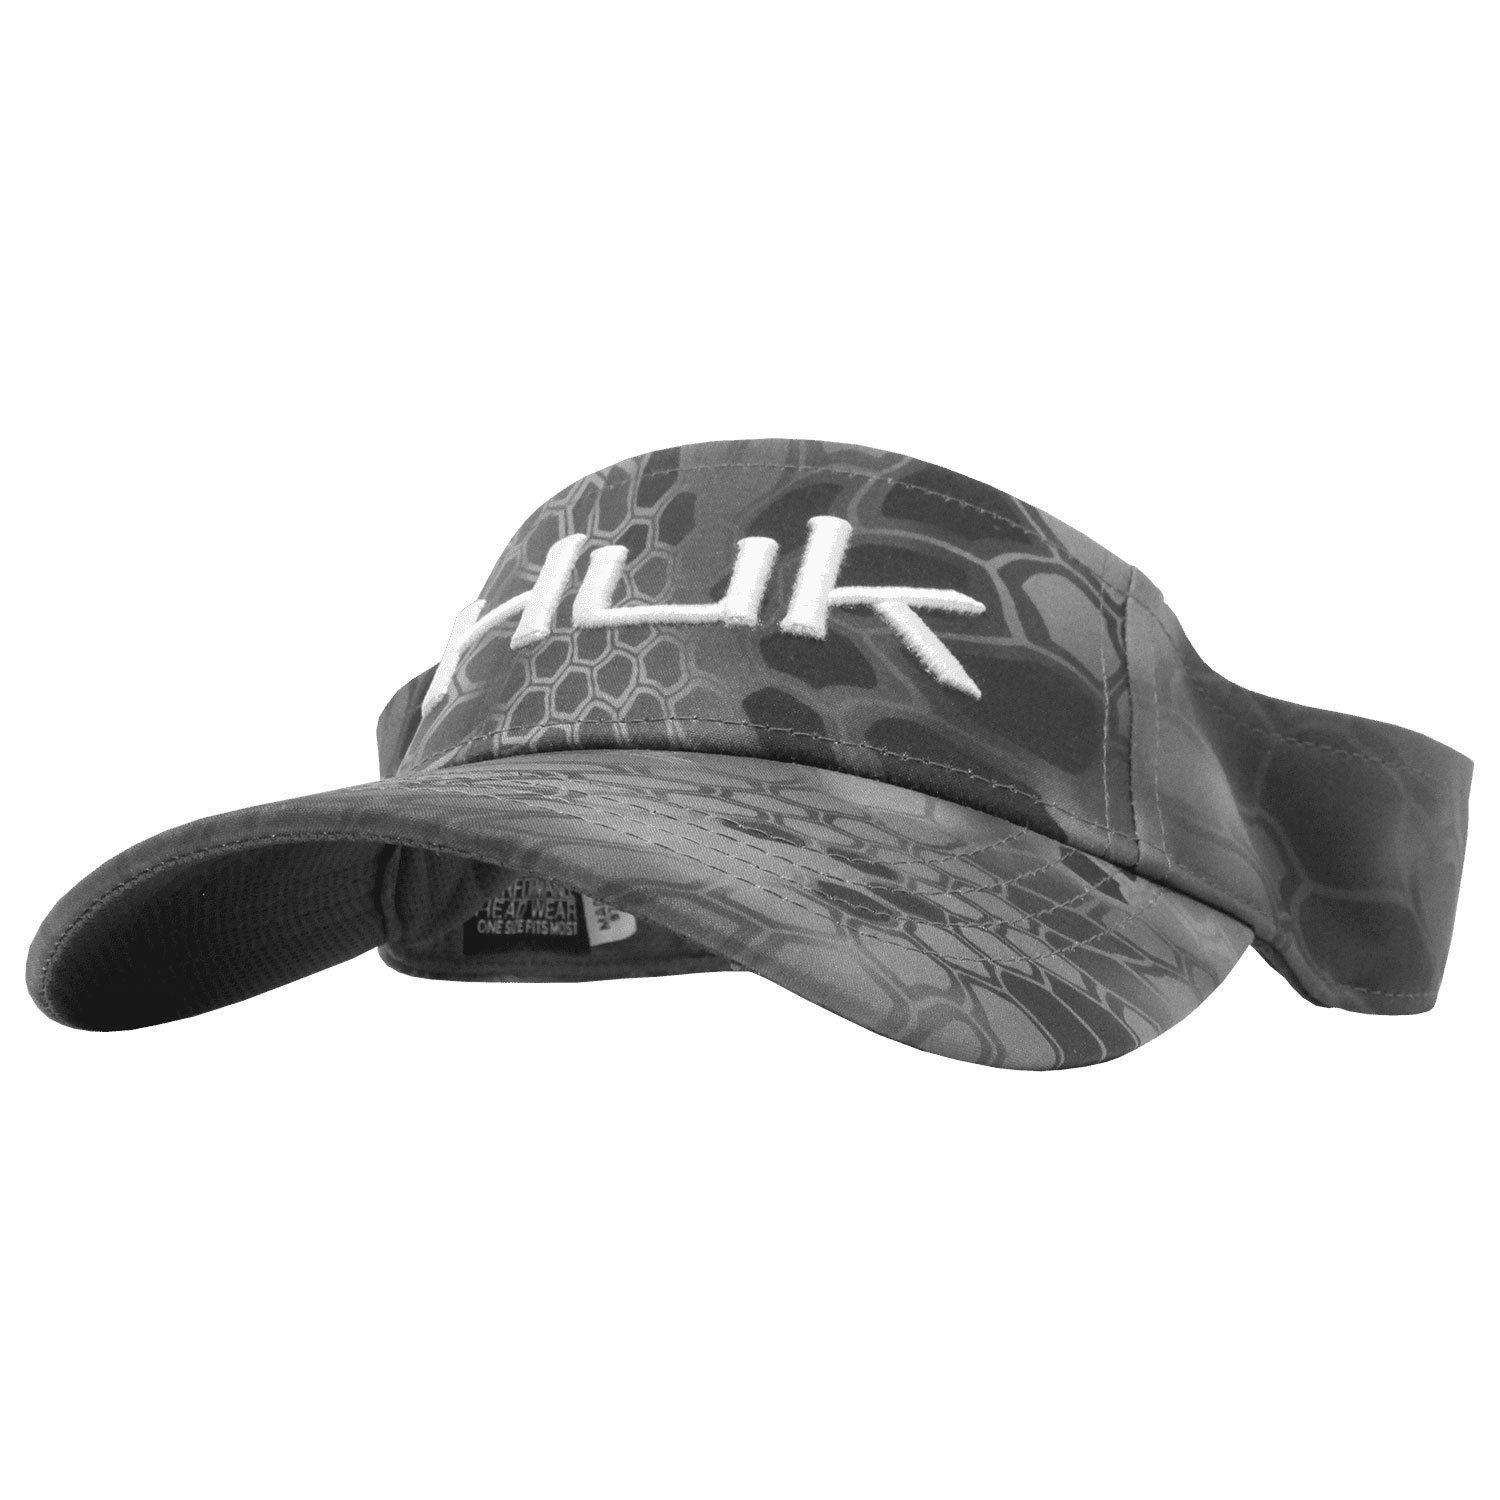 Huk Logo - Huk Logo Visor